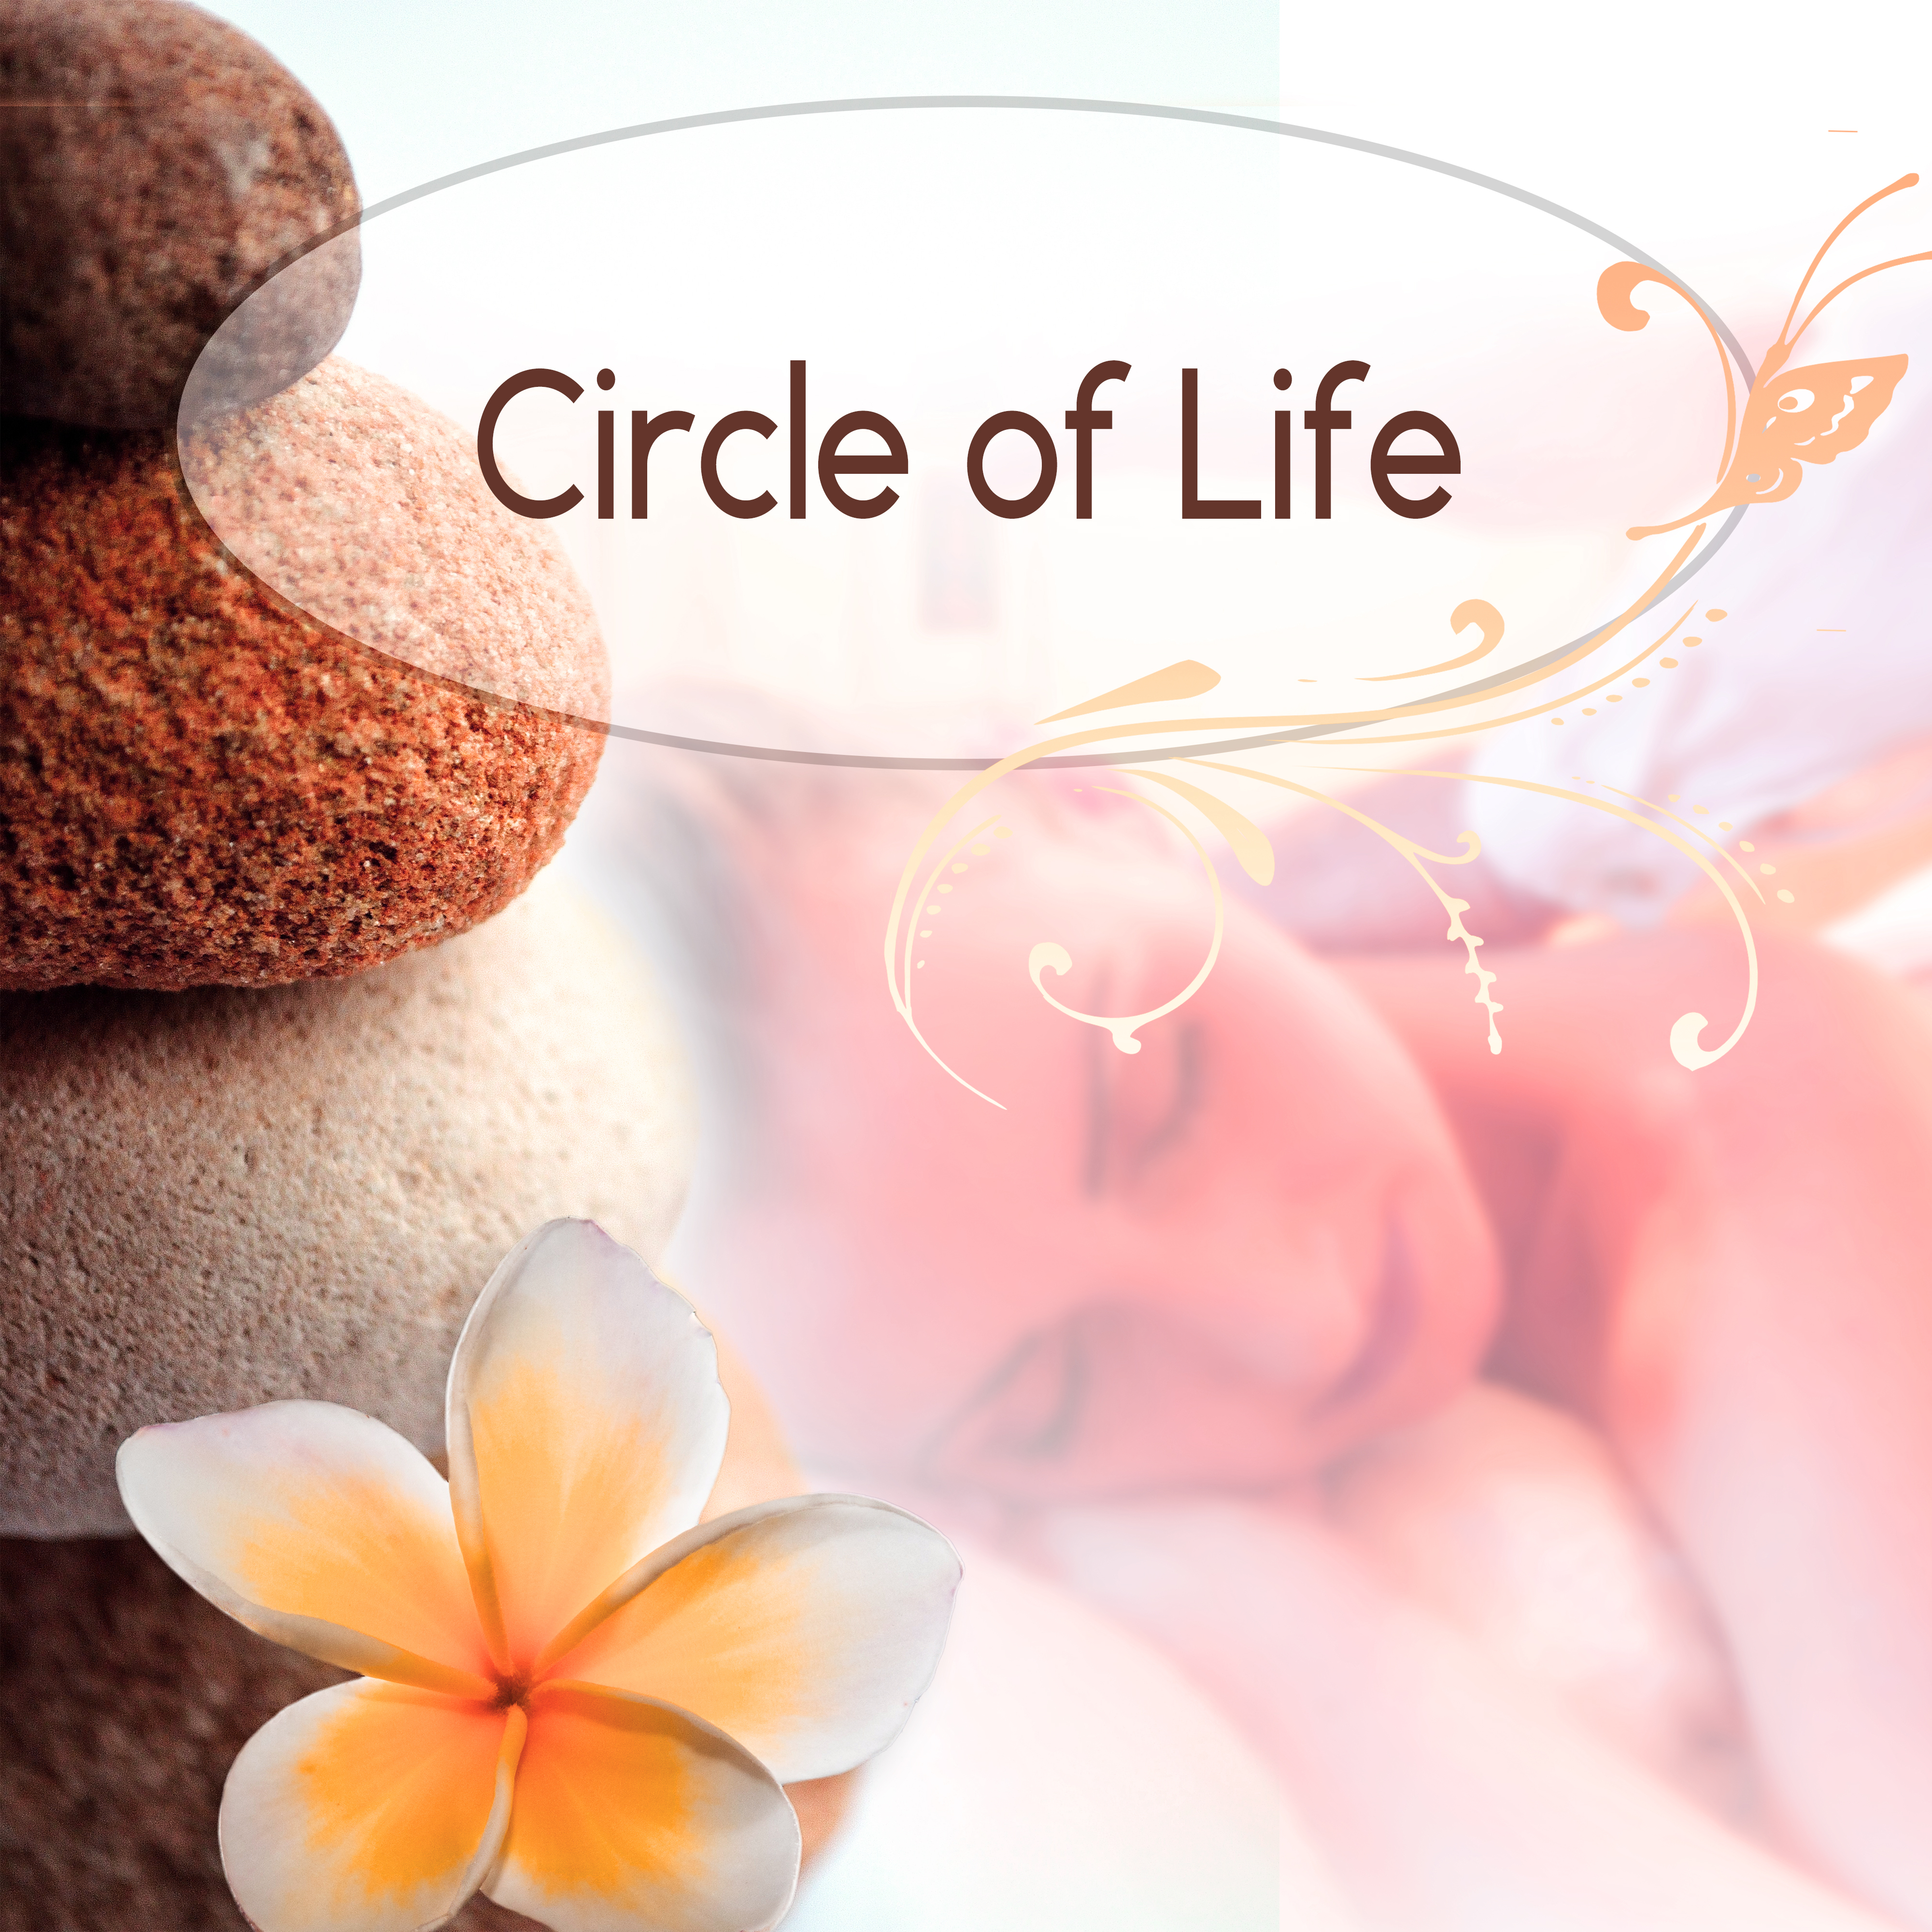 Circle of Life - Meditation & Yoga Exercises, Guided Imagery Music, Asian Zen Spa and Massage